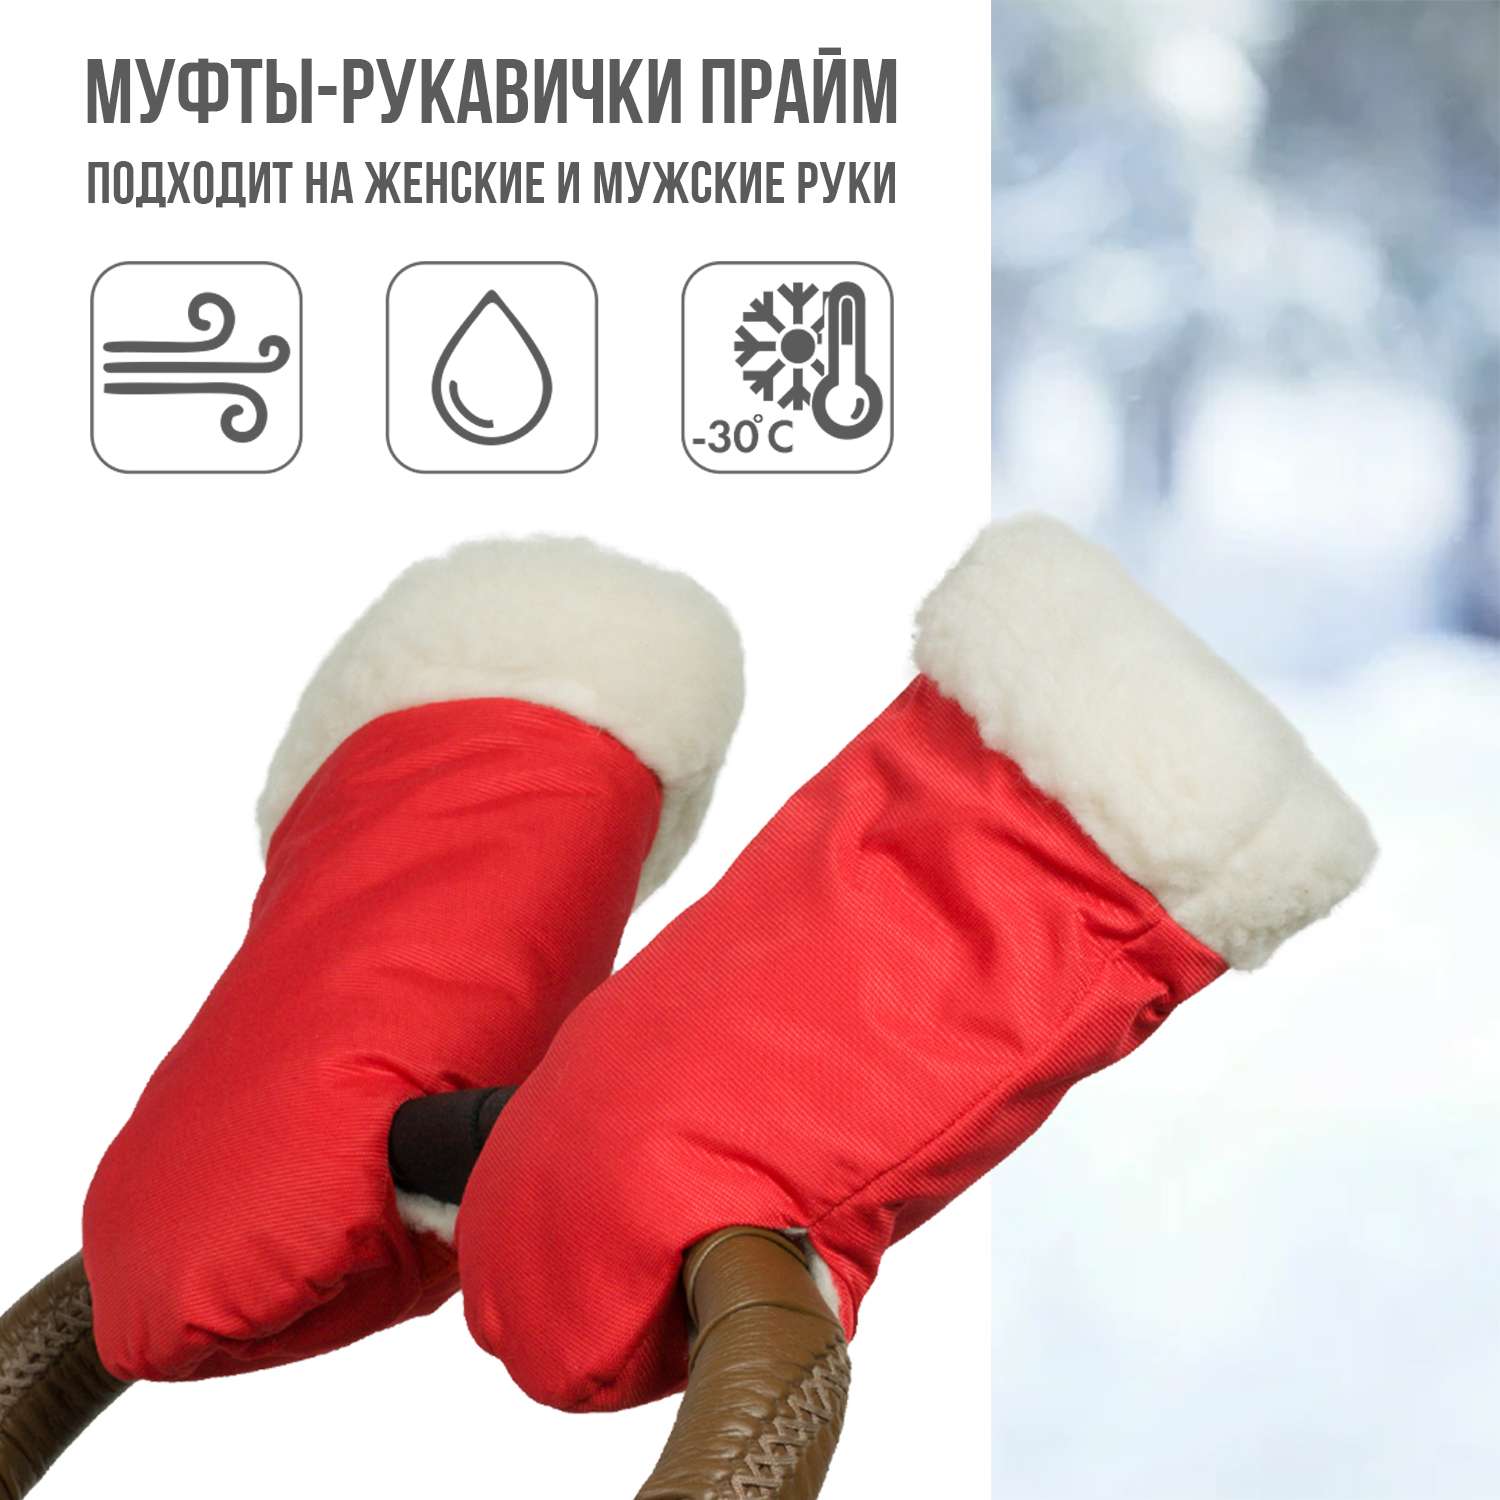 Муфта-рукавички для коляски Чудо-чадо меховая Прайм красная МРМ02-001 - фото 1